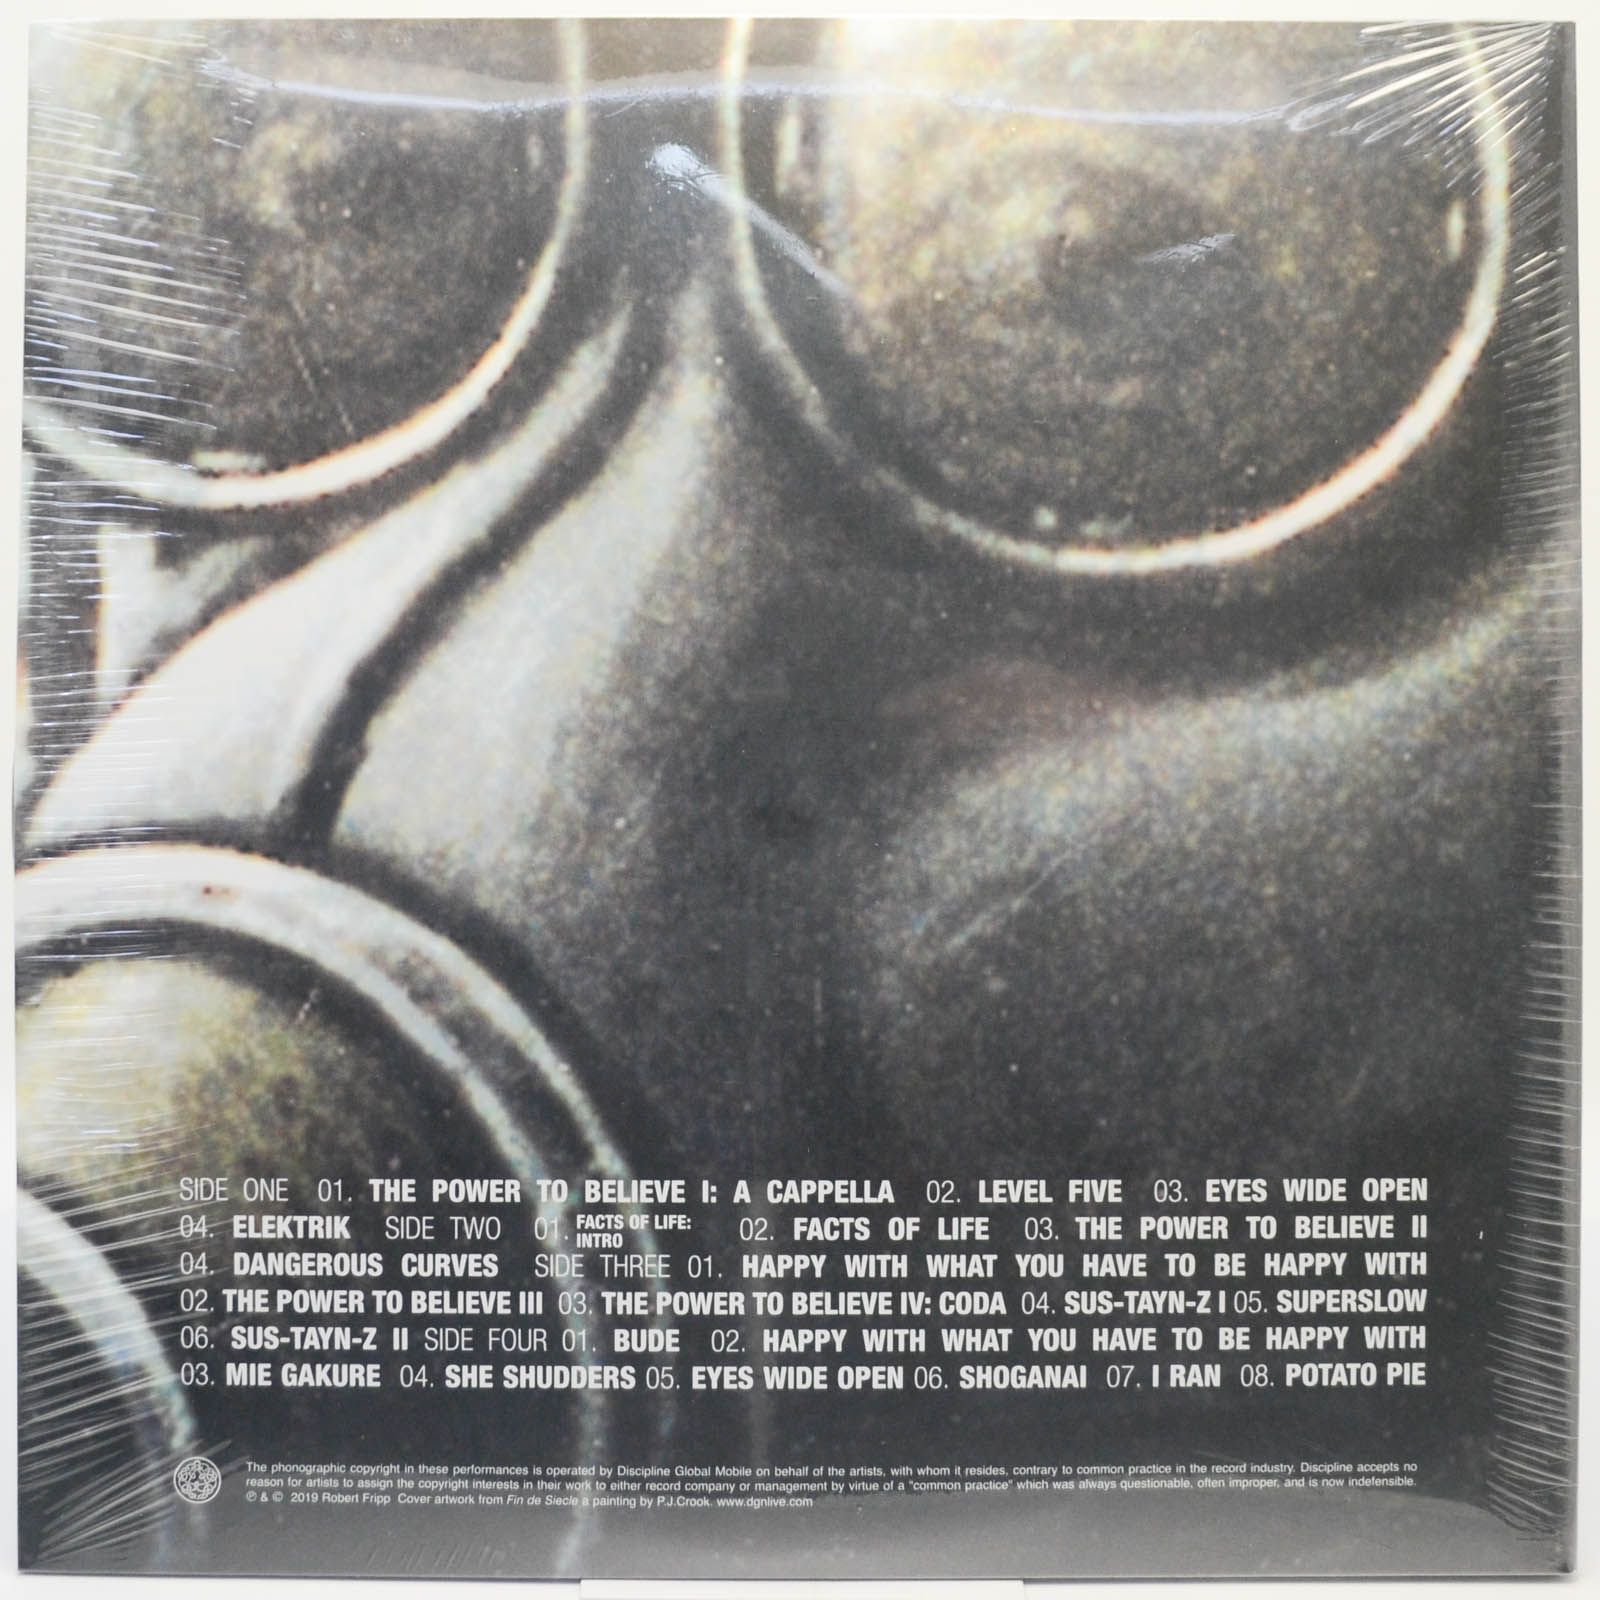 King Crimson — The Power To Believe (2LP), 2003